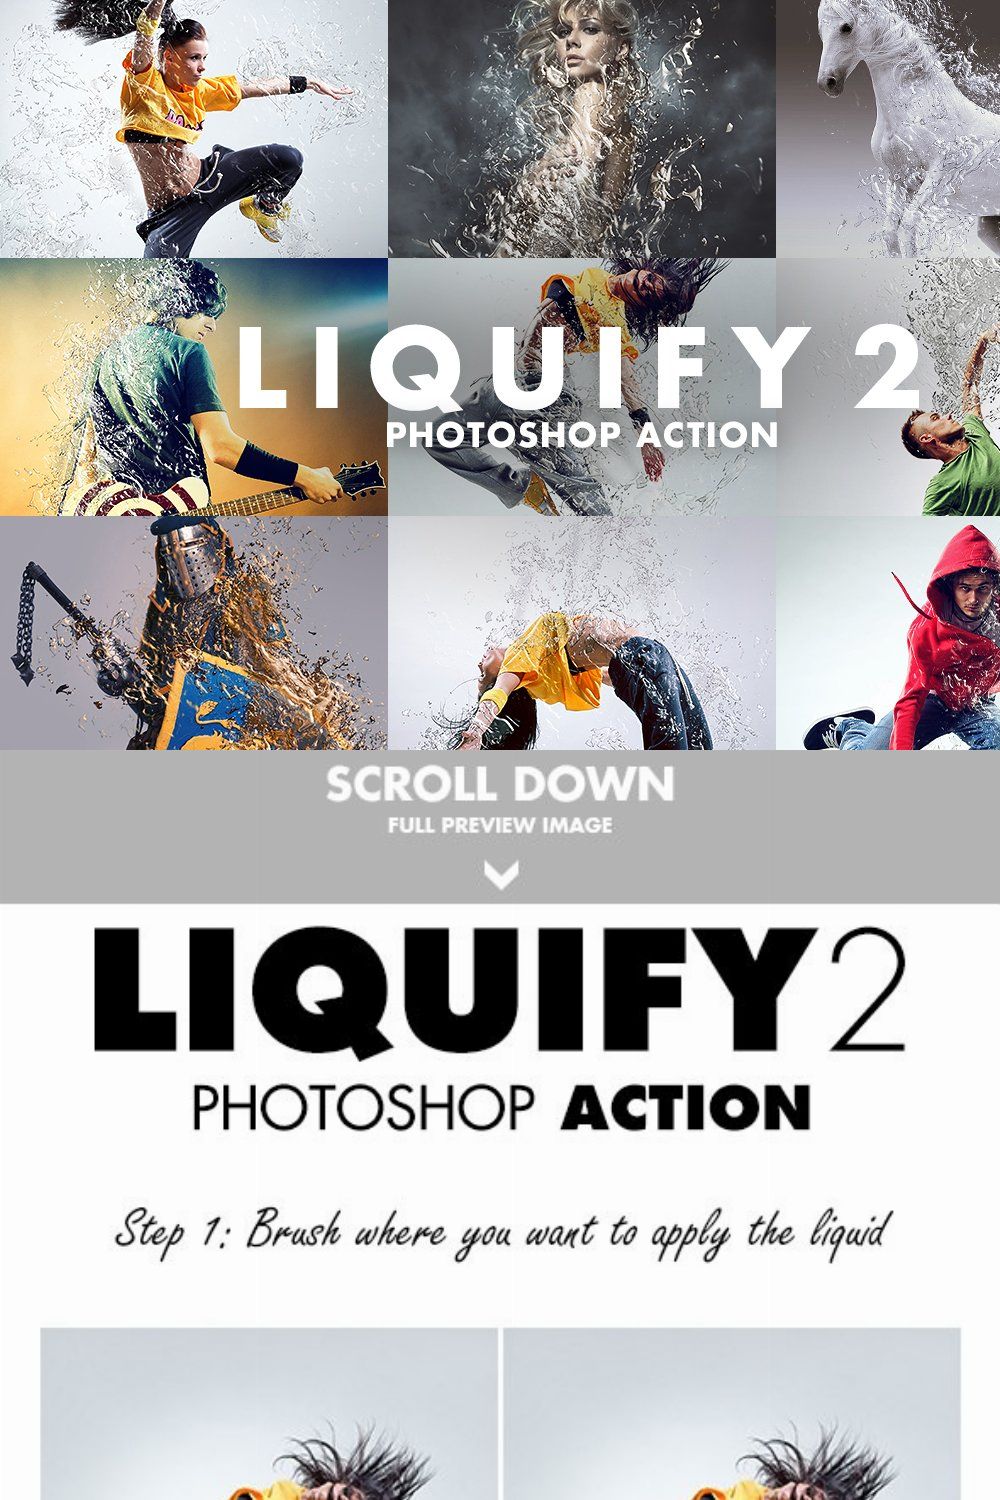 Liquify 2 Photoshop Action pinterest preview image.